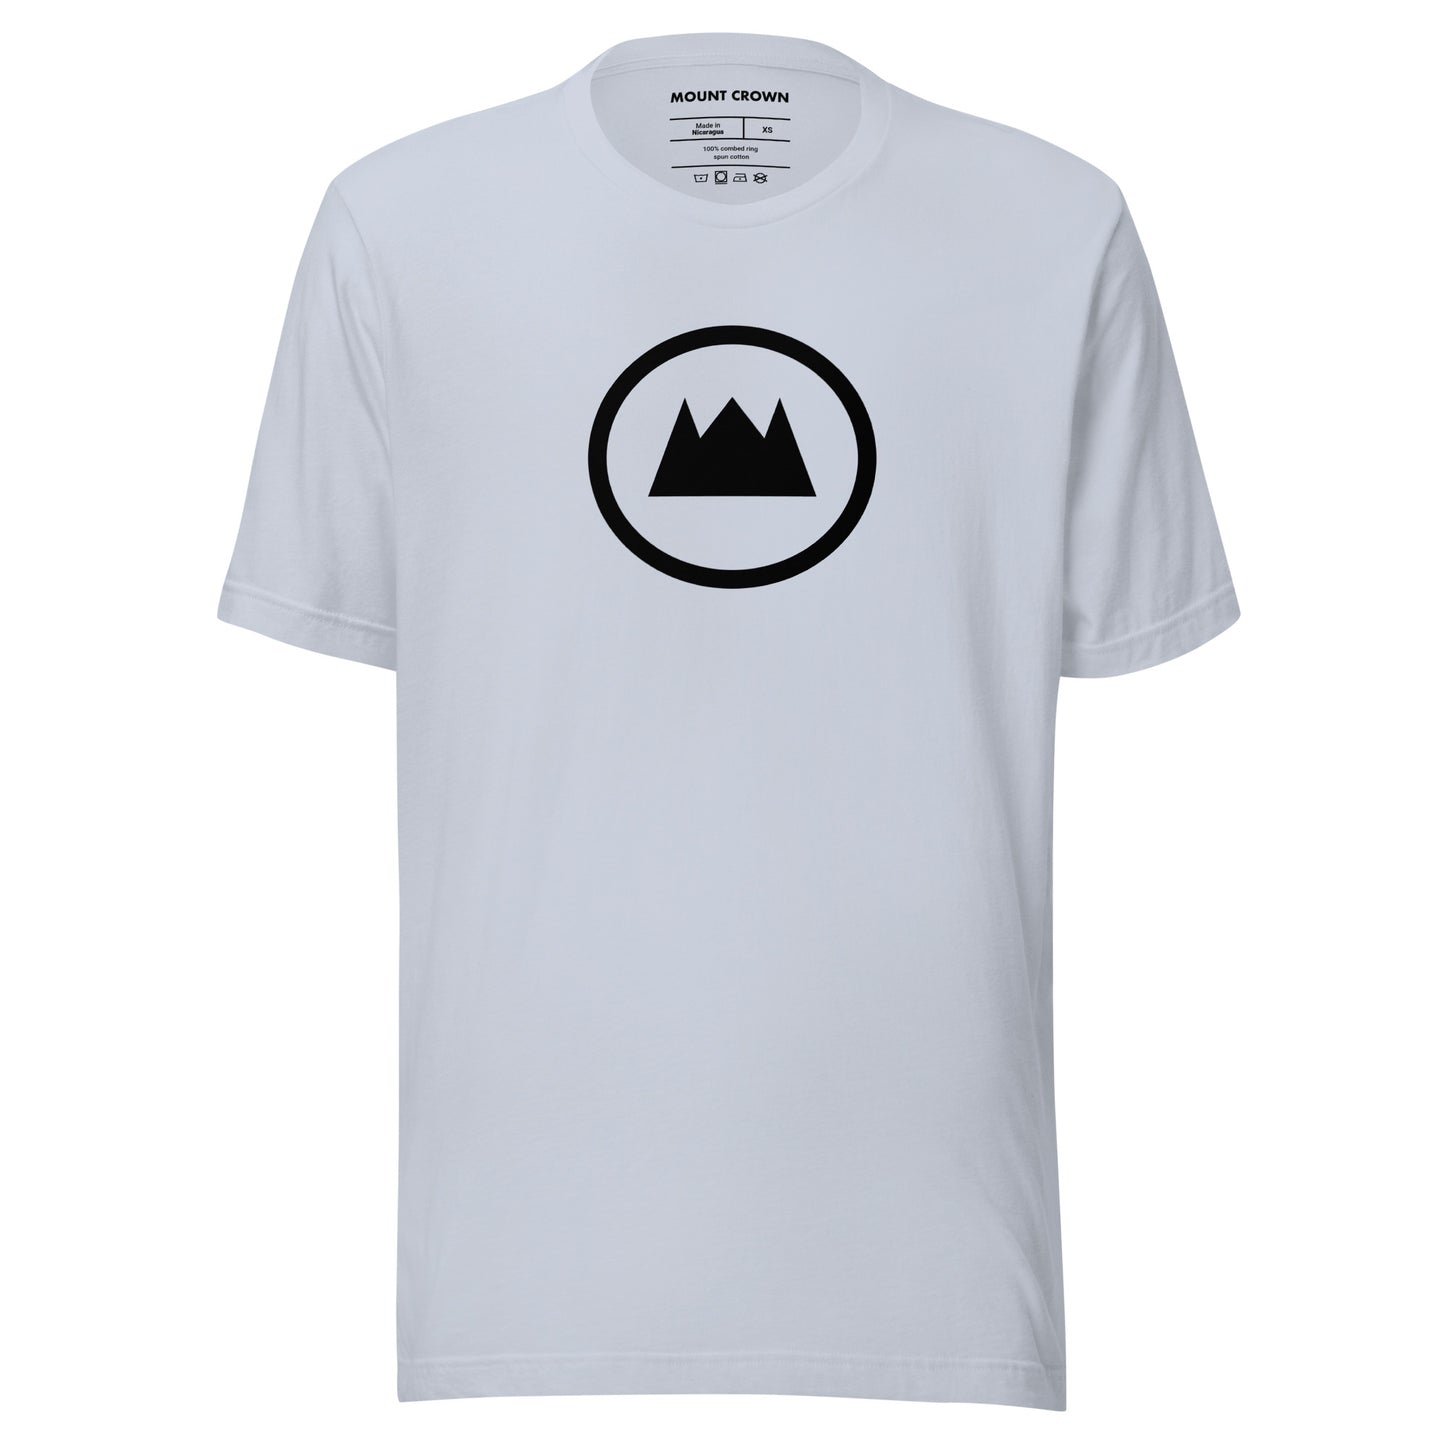 MOUNT CROWN (Blk) T-shirt